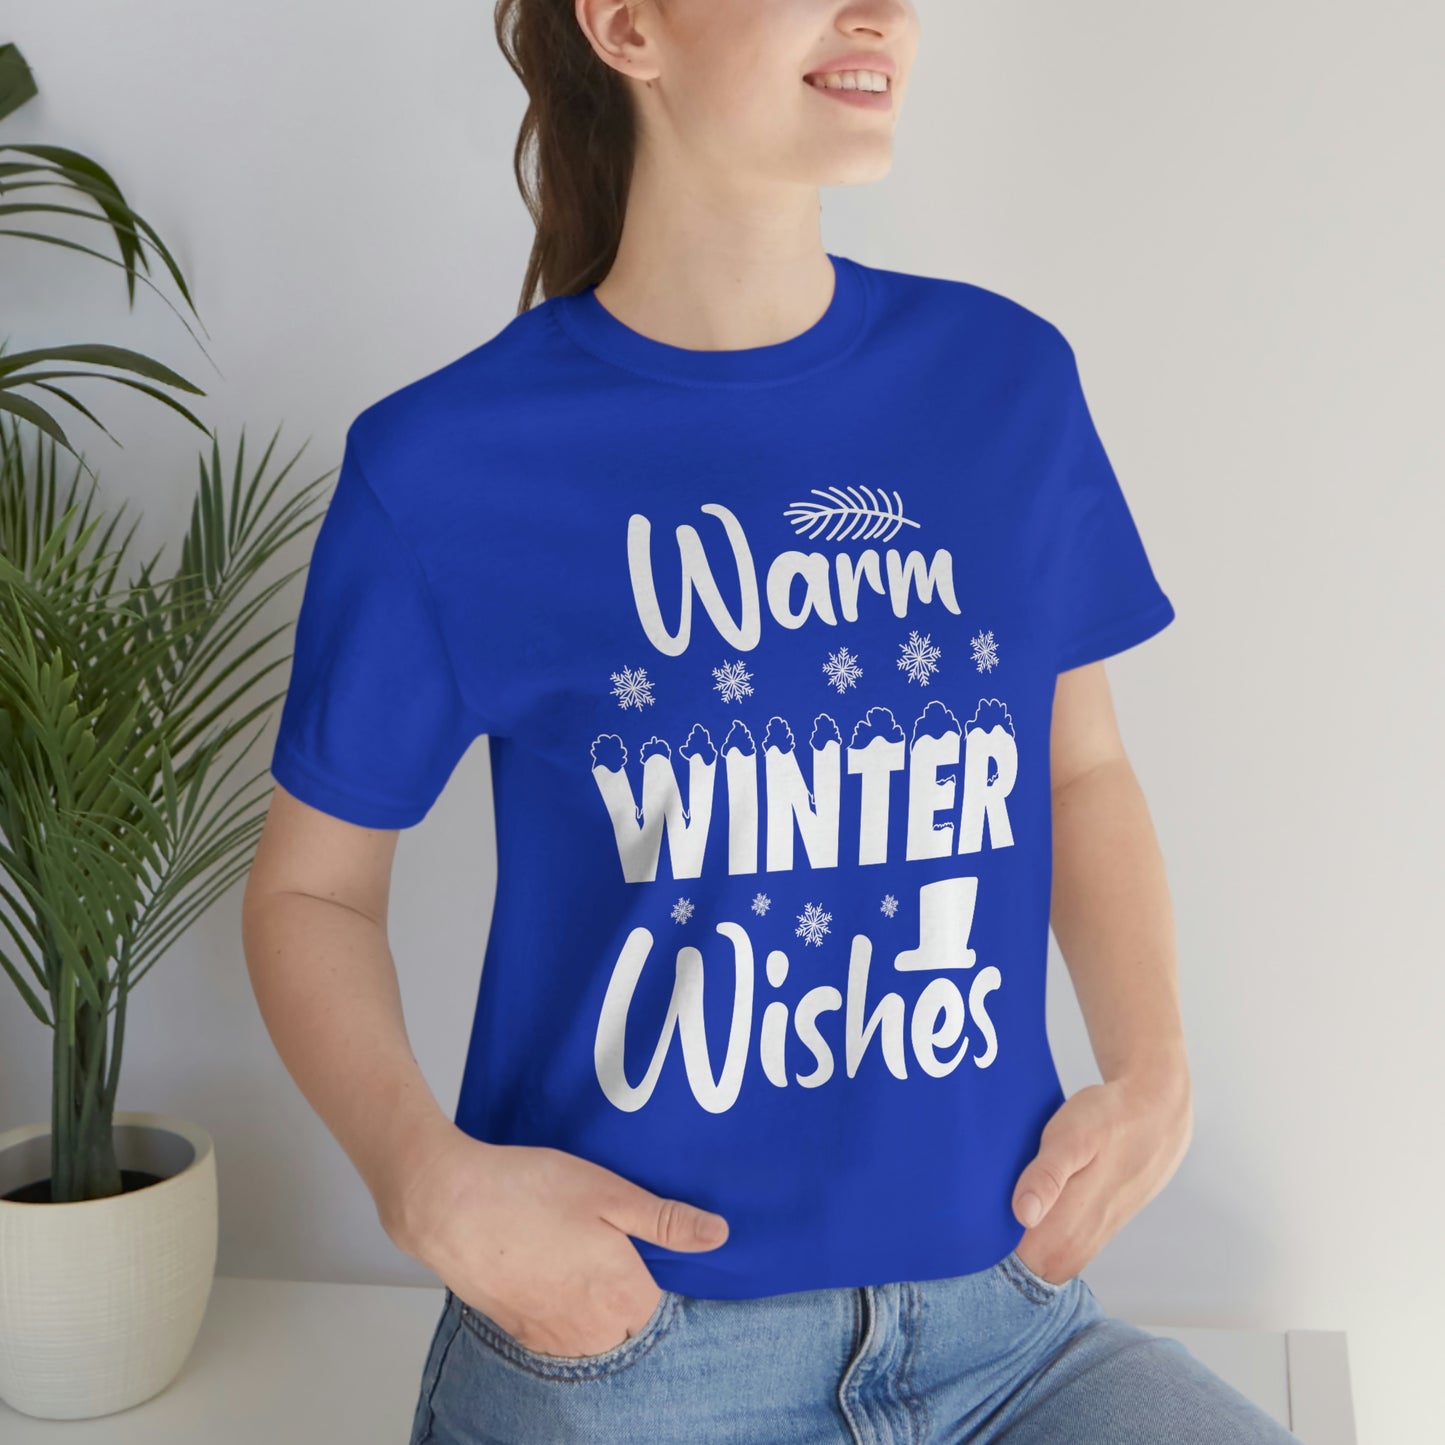 Warm Winter Wishes Unisex Jersey Short Sleeve Tee